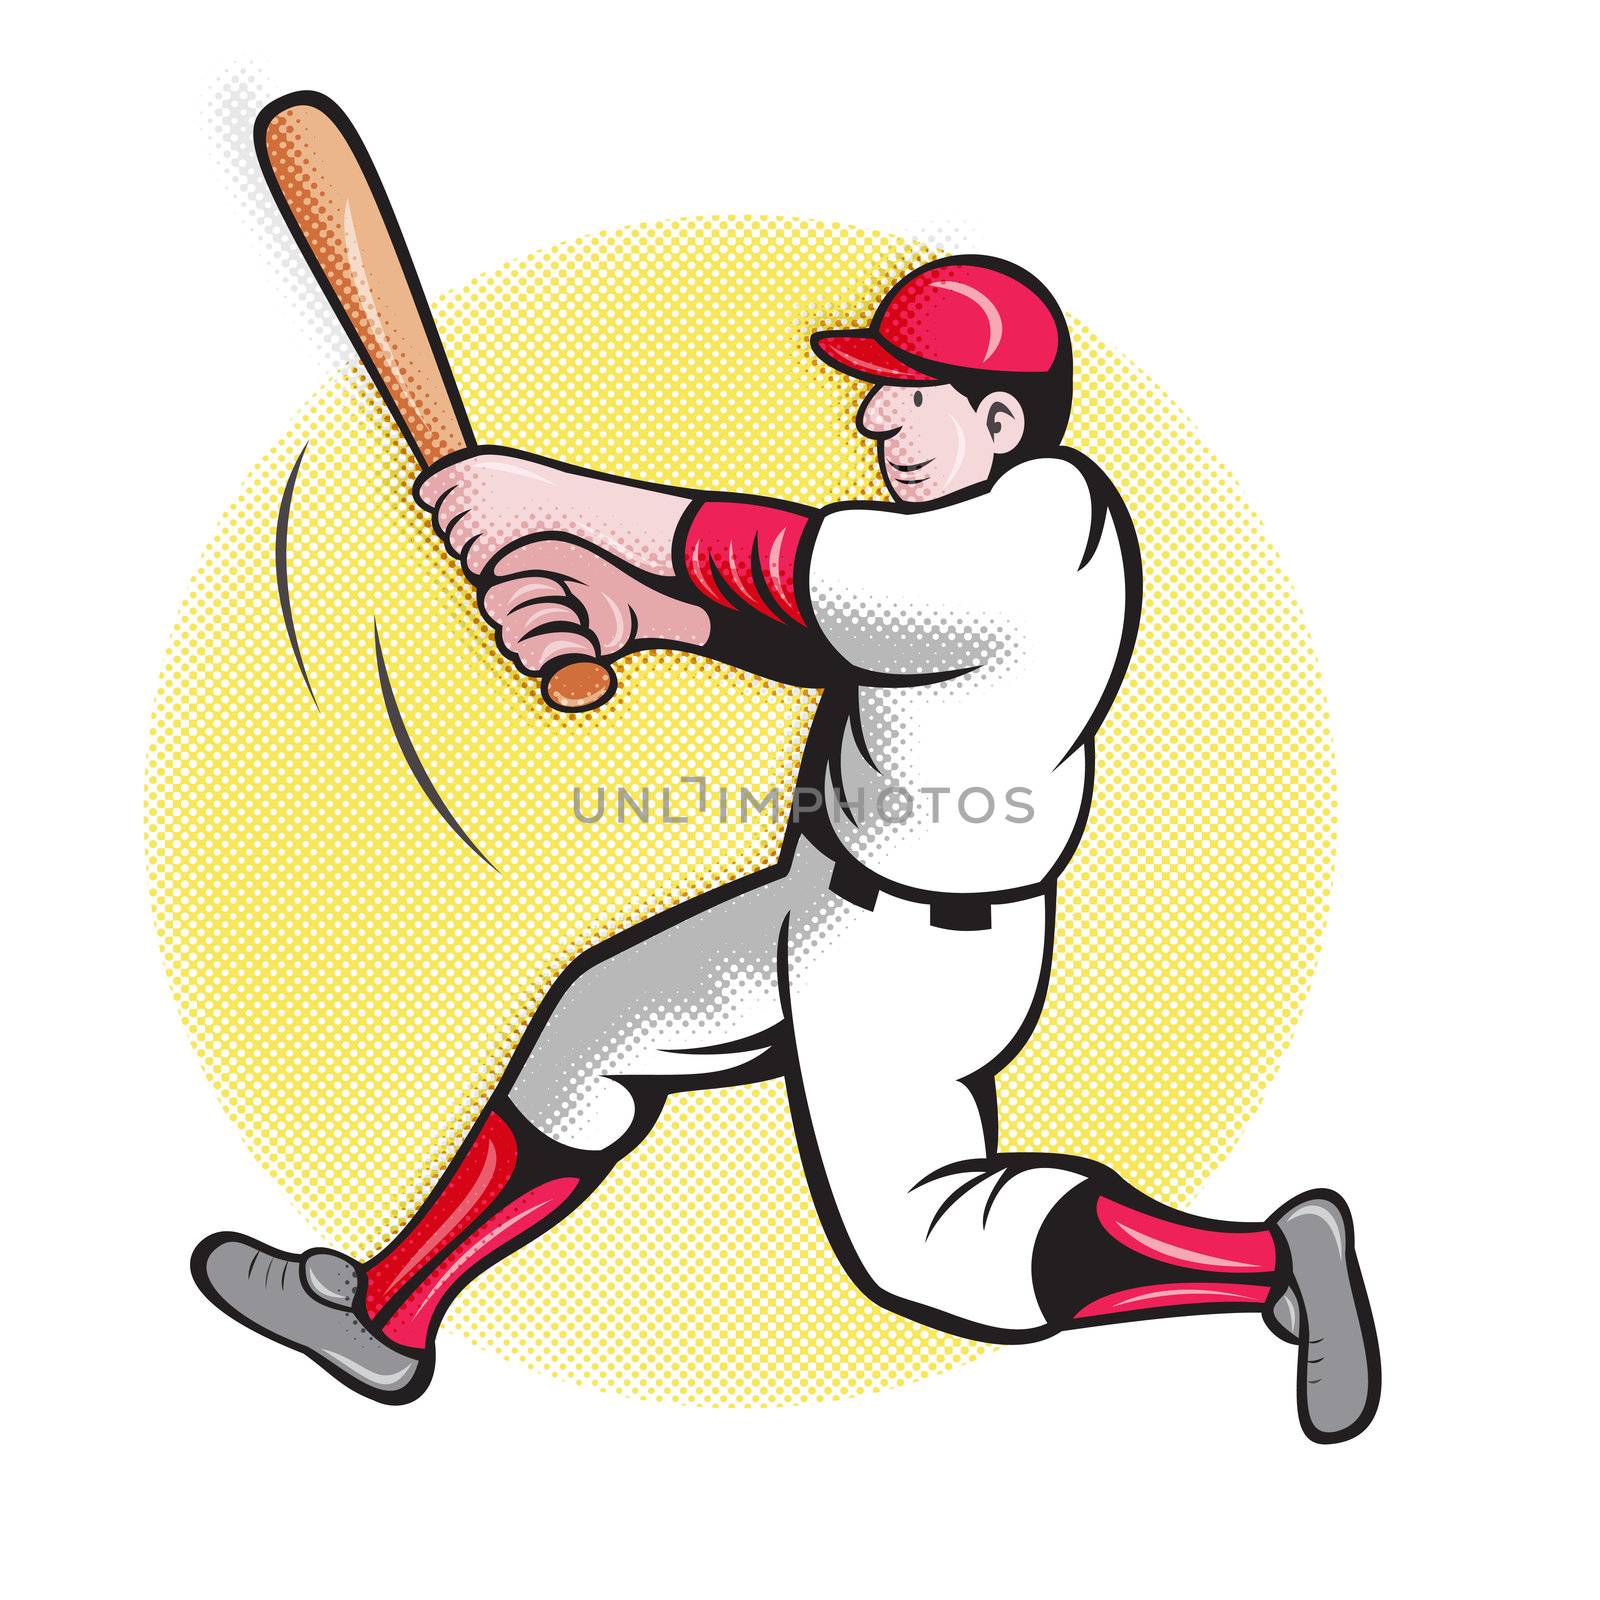 illustration of a baseball player batting cartoon style isolated on white